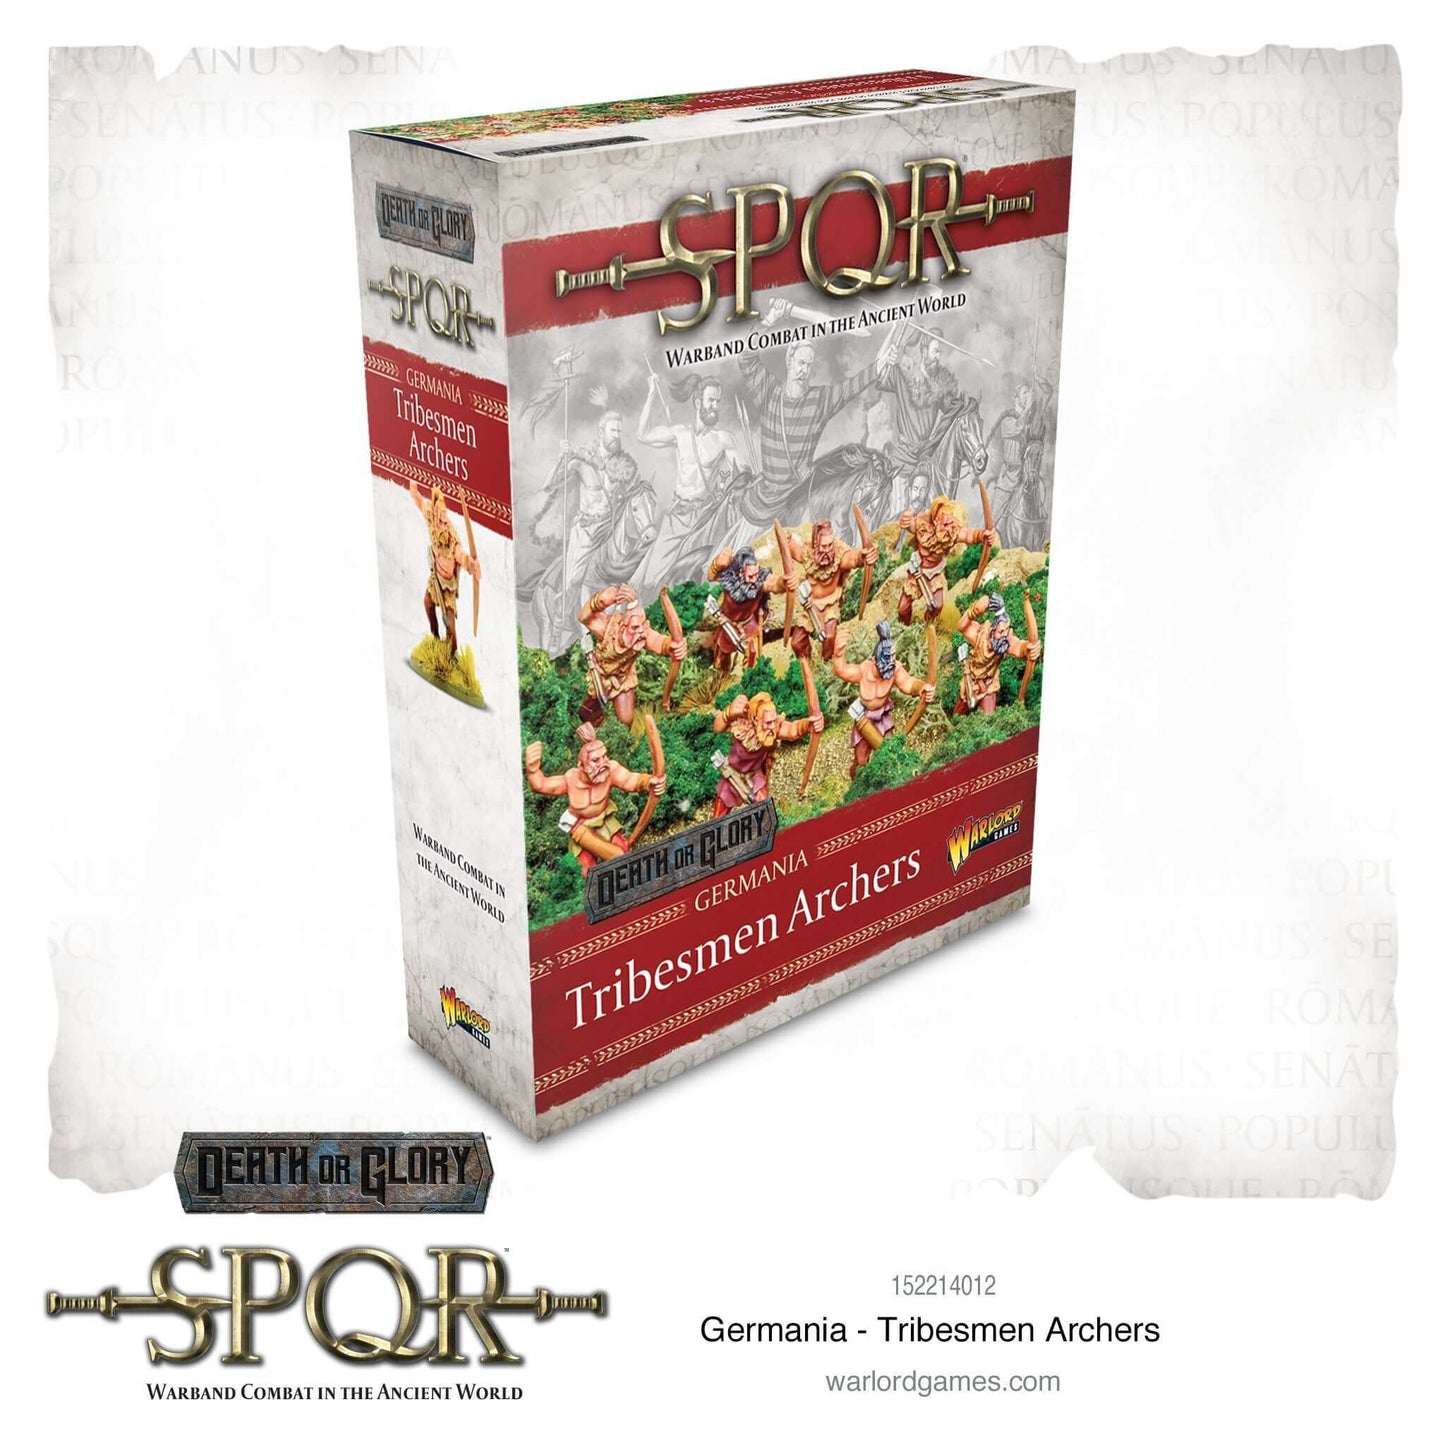 SPQR: Germania - Tribesmen Archers by Warlord